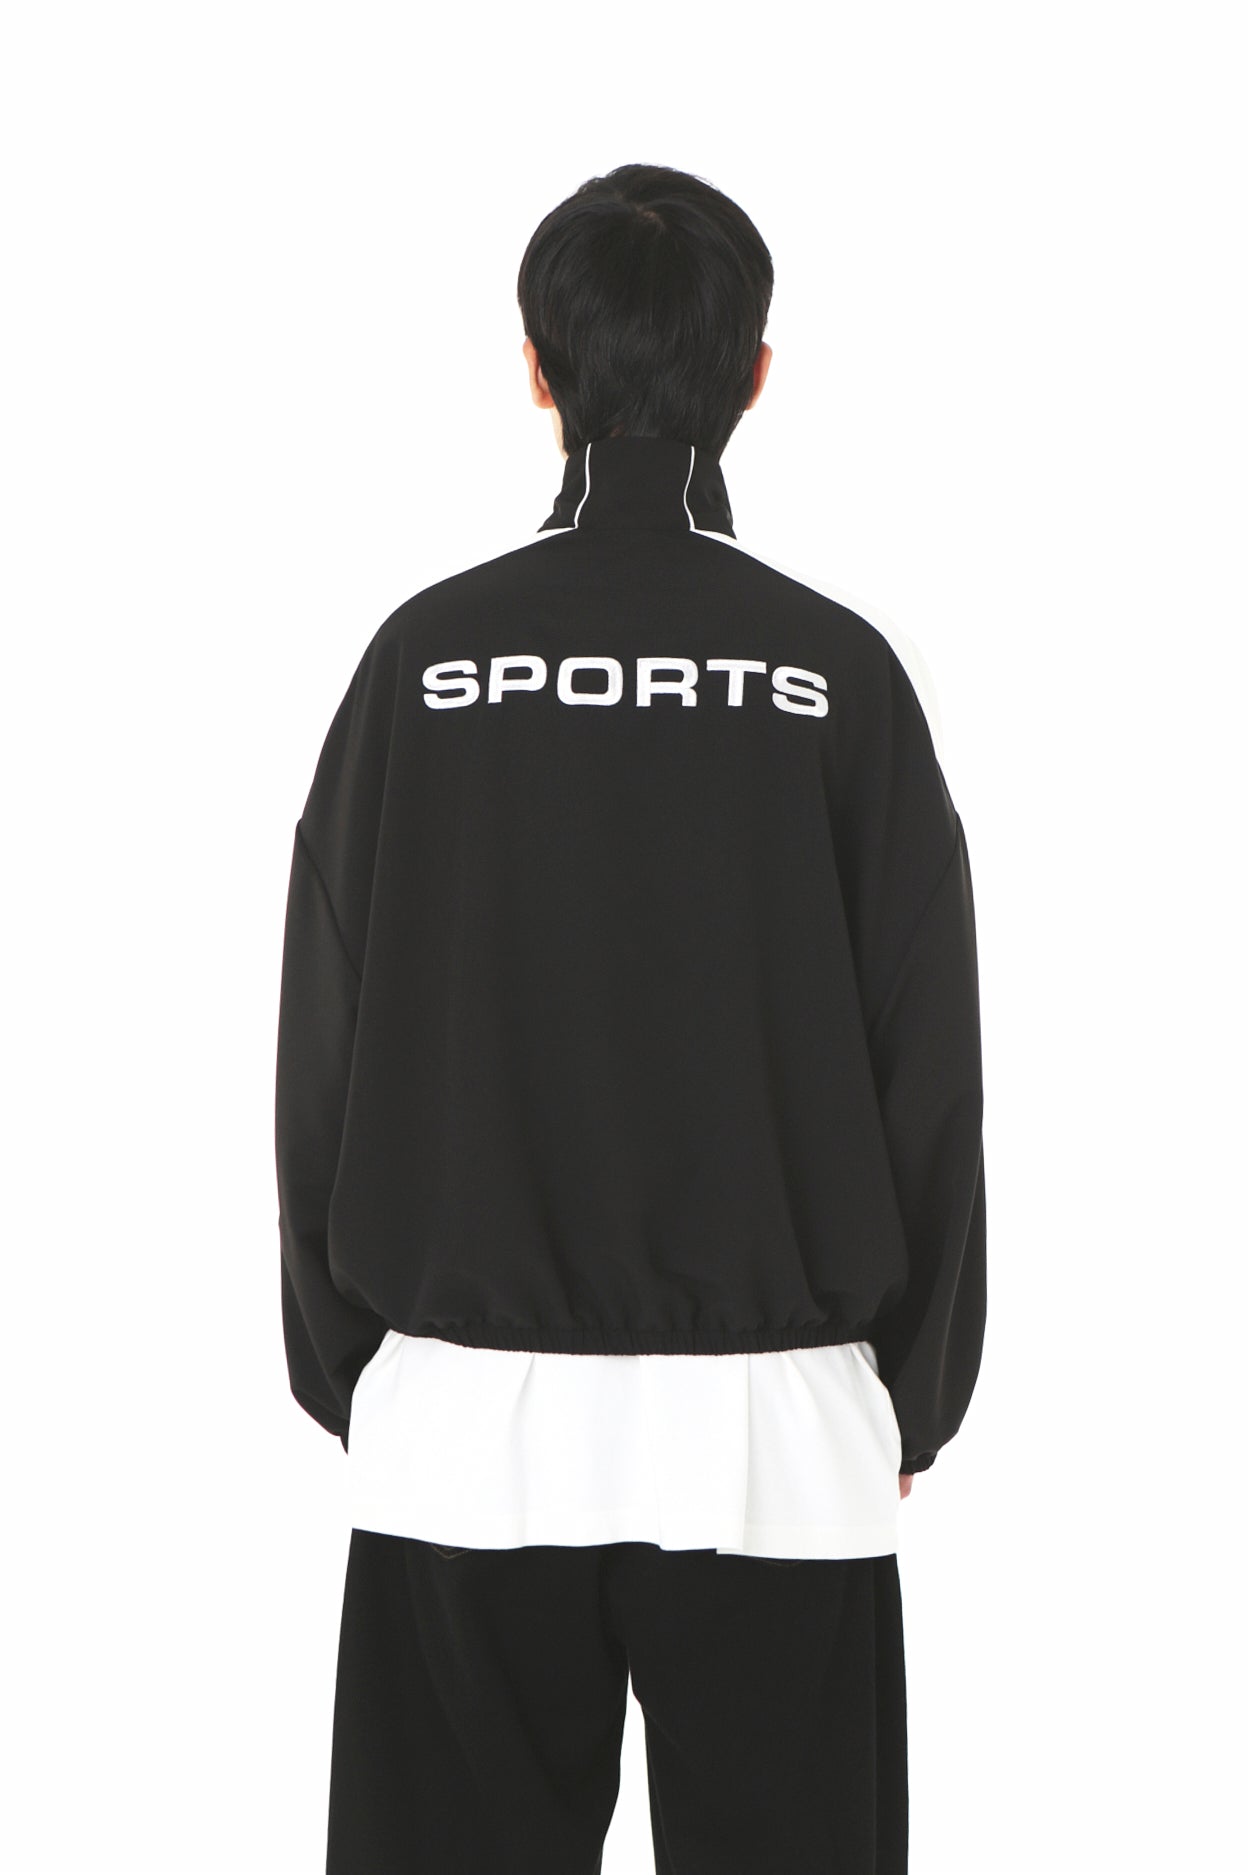 Willy Sports Pregame Jacket Black